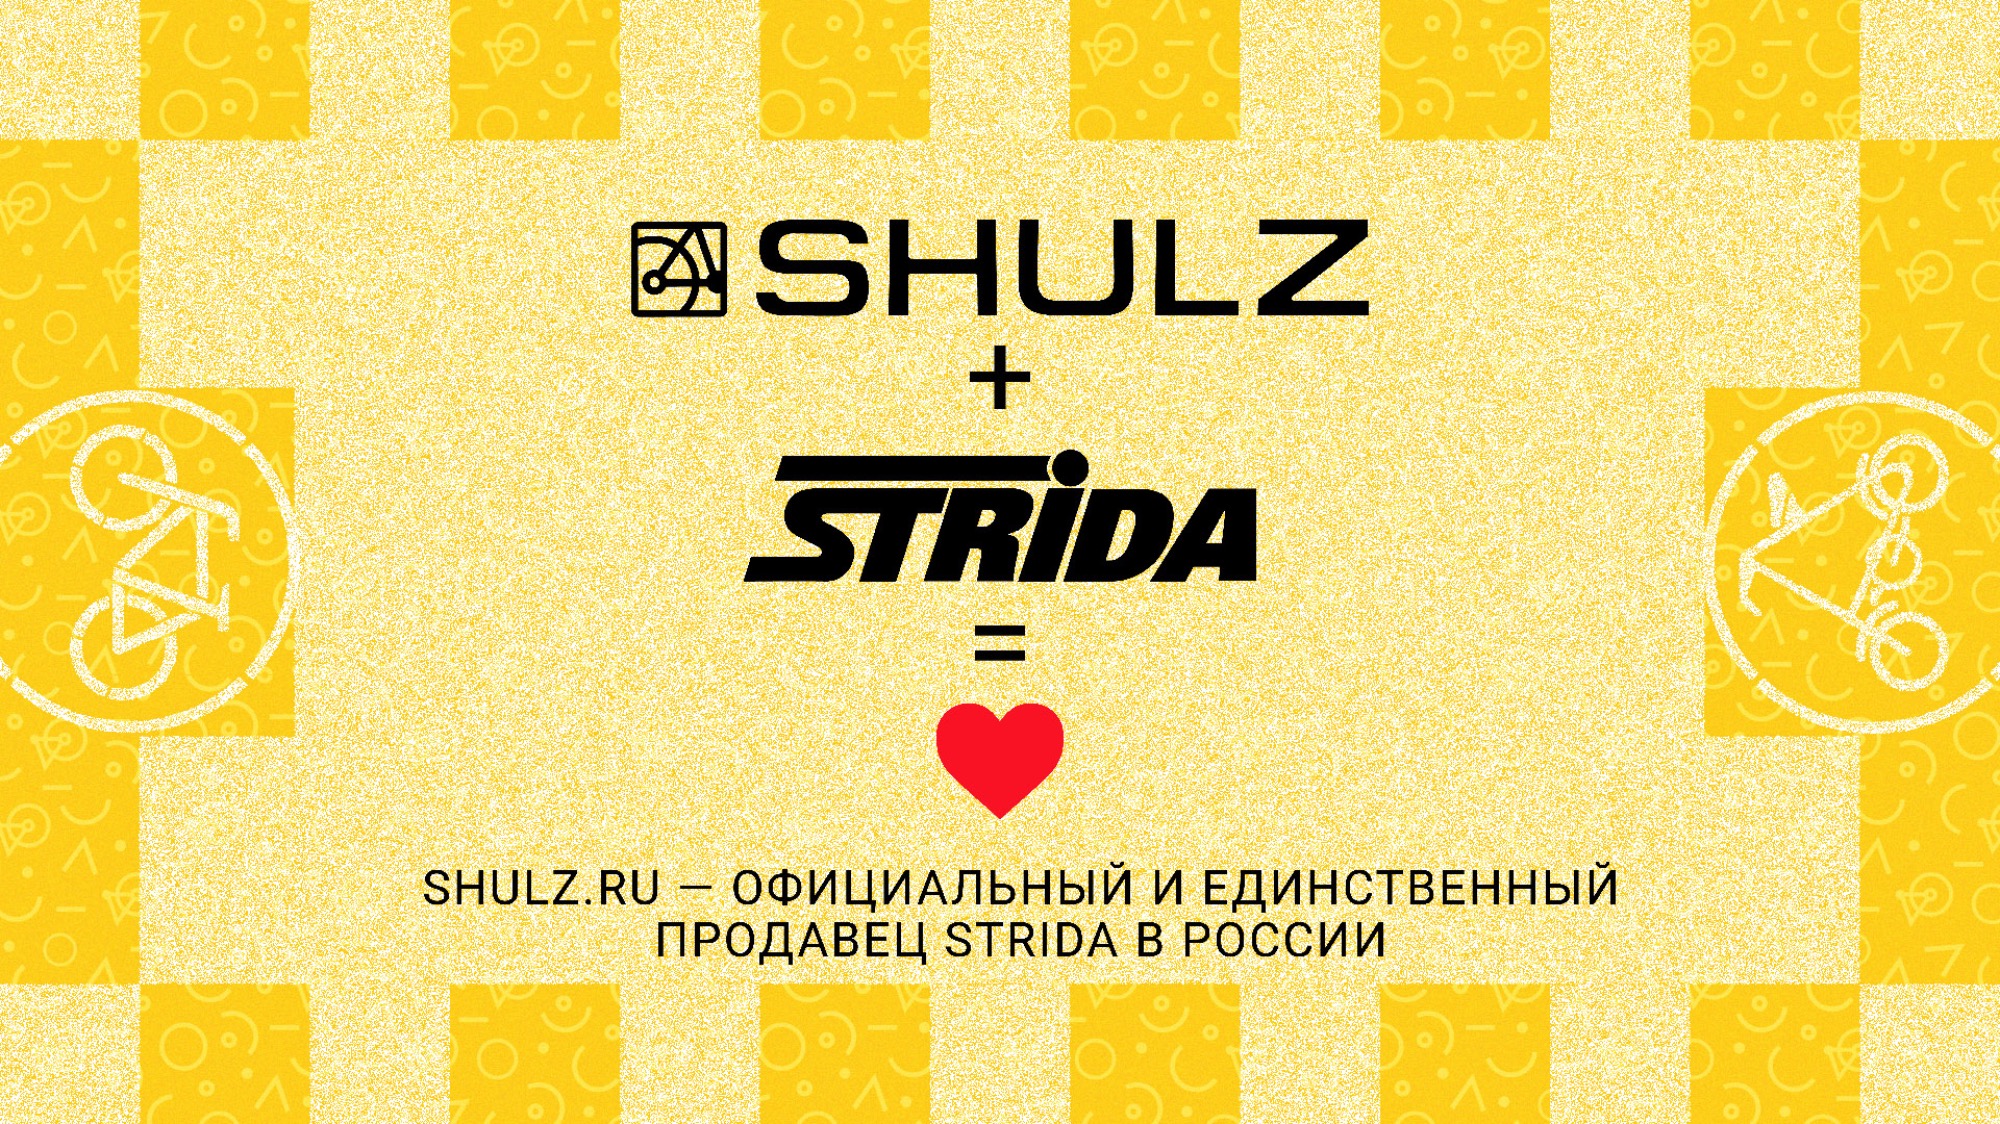 SHULZ — дистрибьютор STRIDA в России